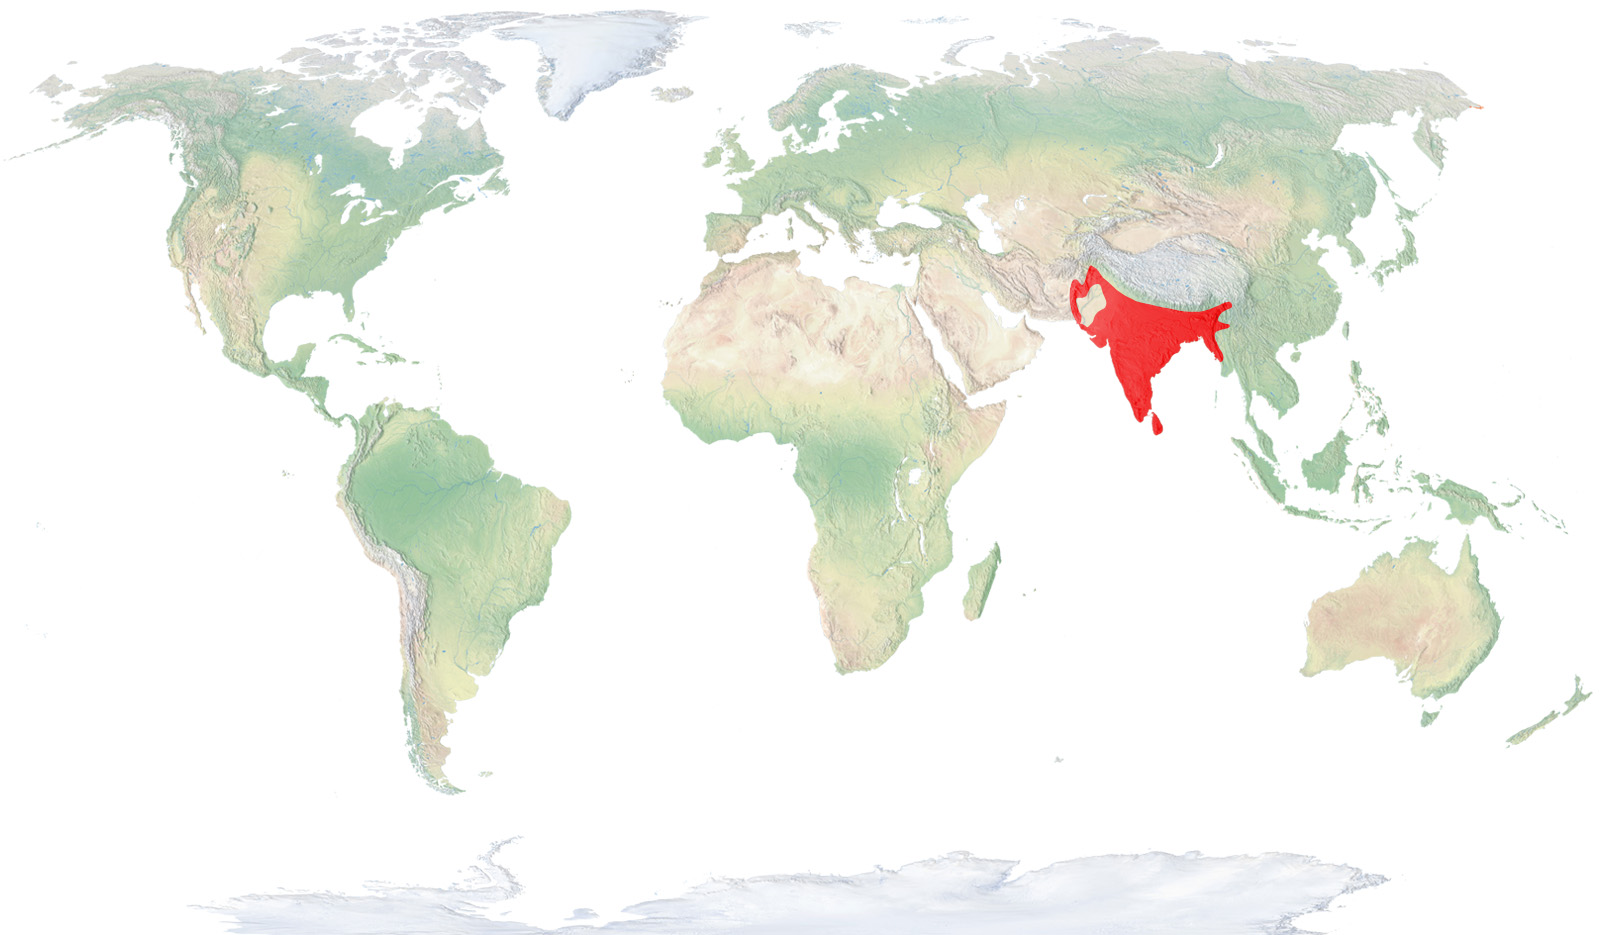 El Pakistan, l’Índia, el Nepal i Sri Lanka